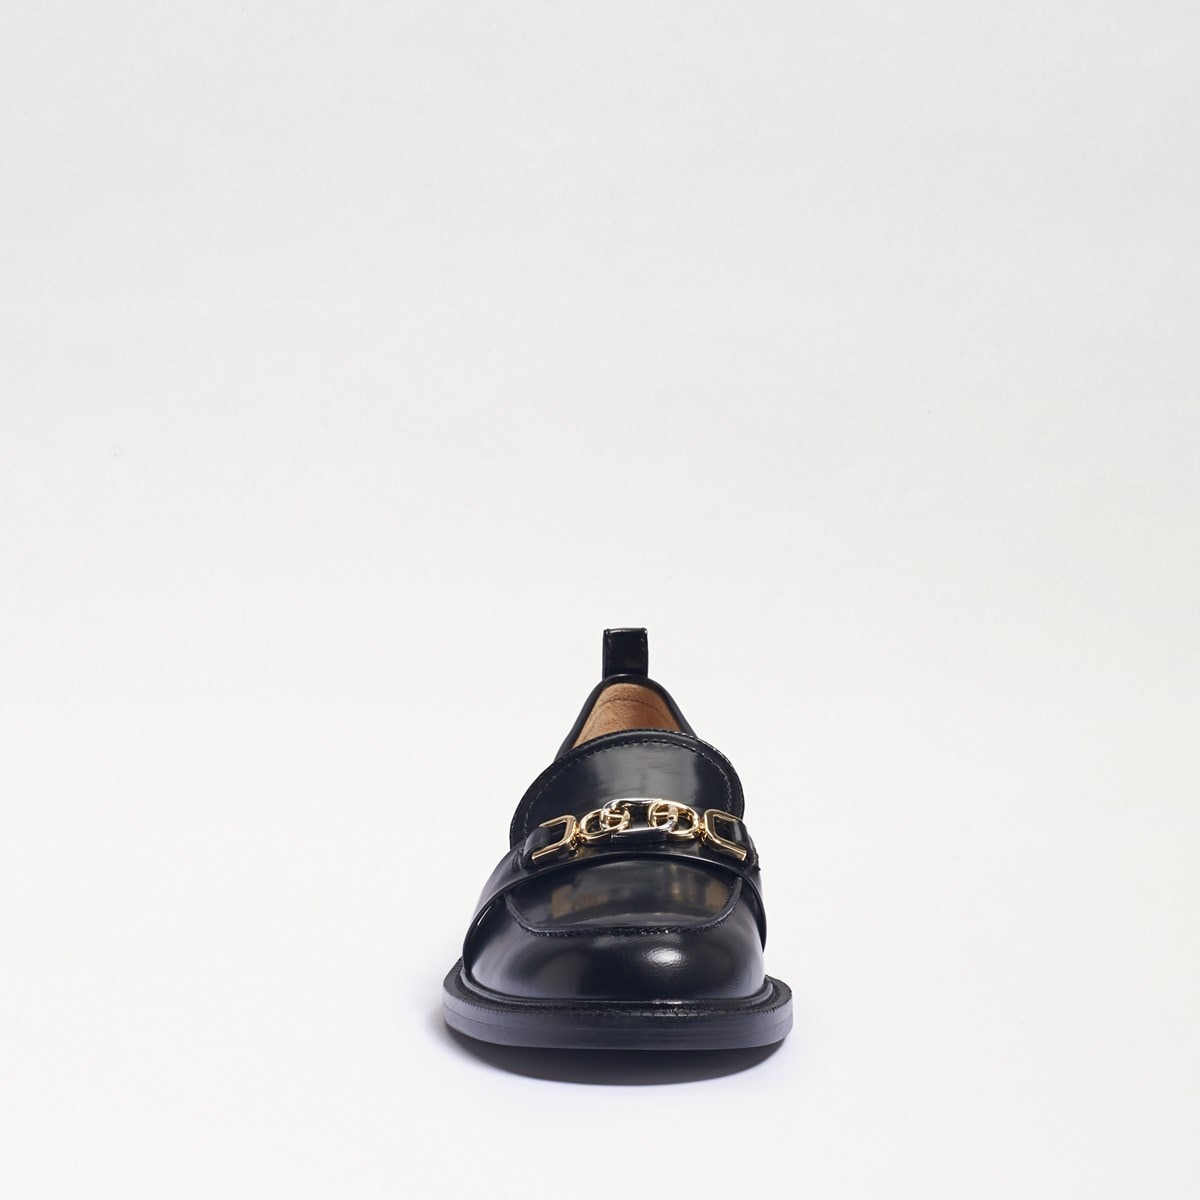 Sam Edelman Christy Loafer Black Box Leather 6.5